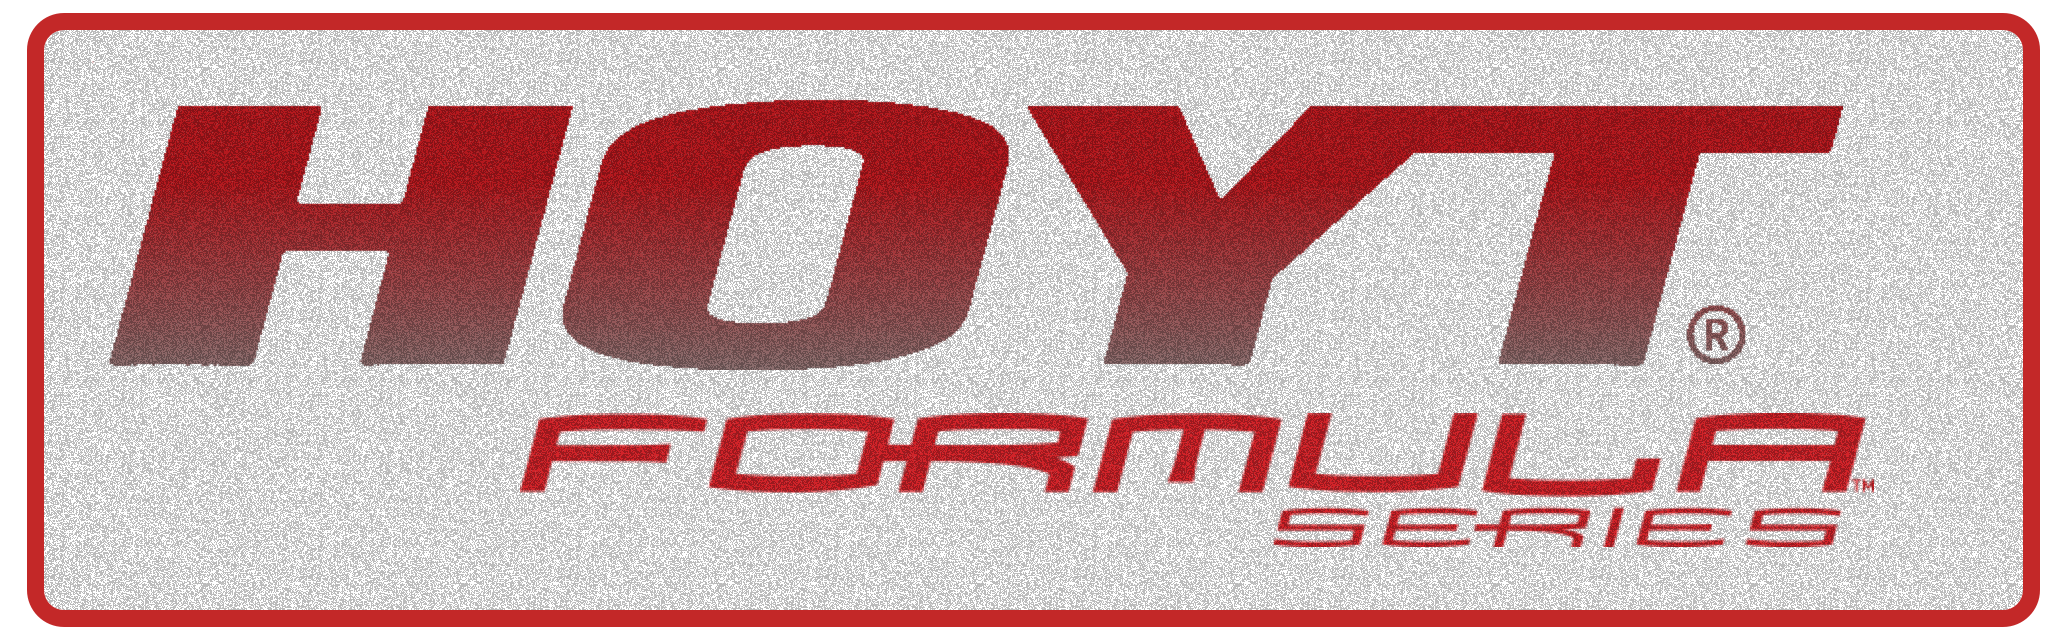 Archery - New sponsor for 2017 - Hoyt Formula Series - The Infinite Curve